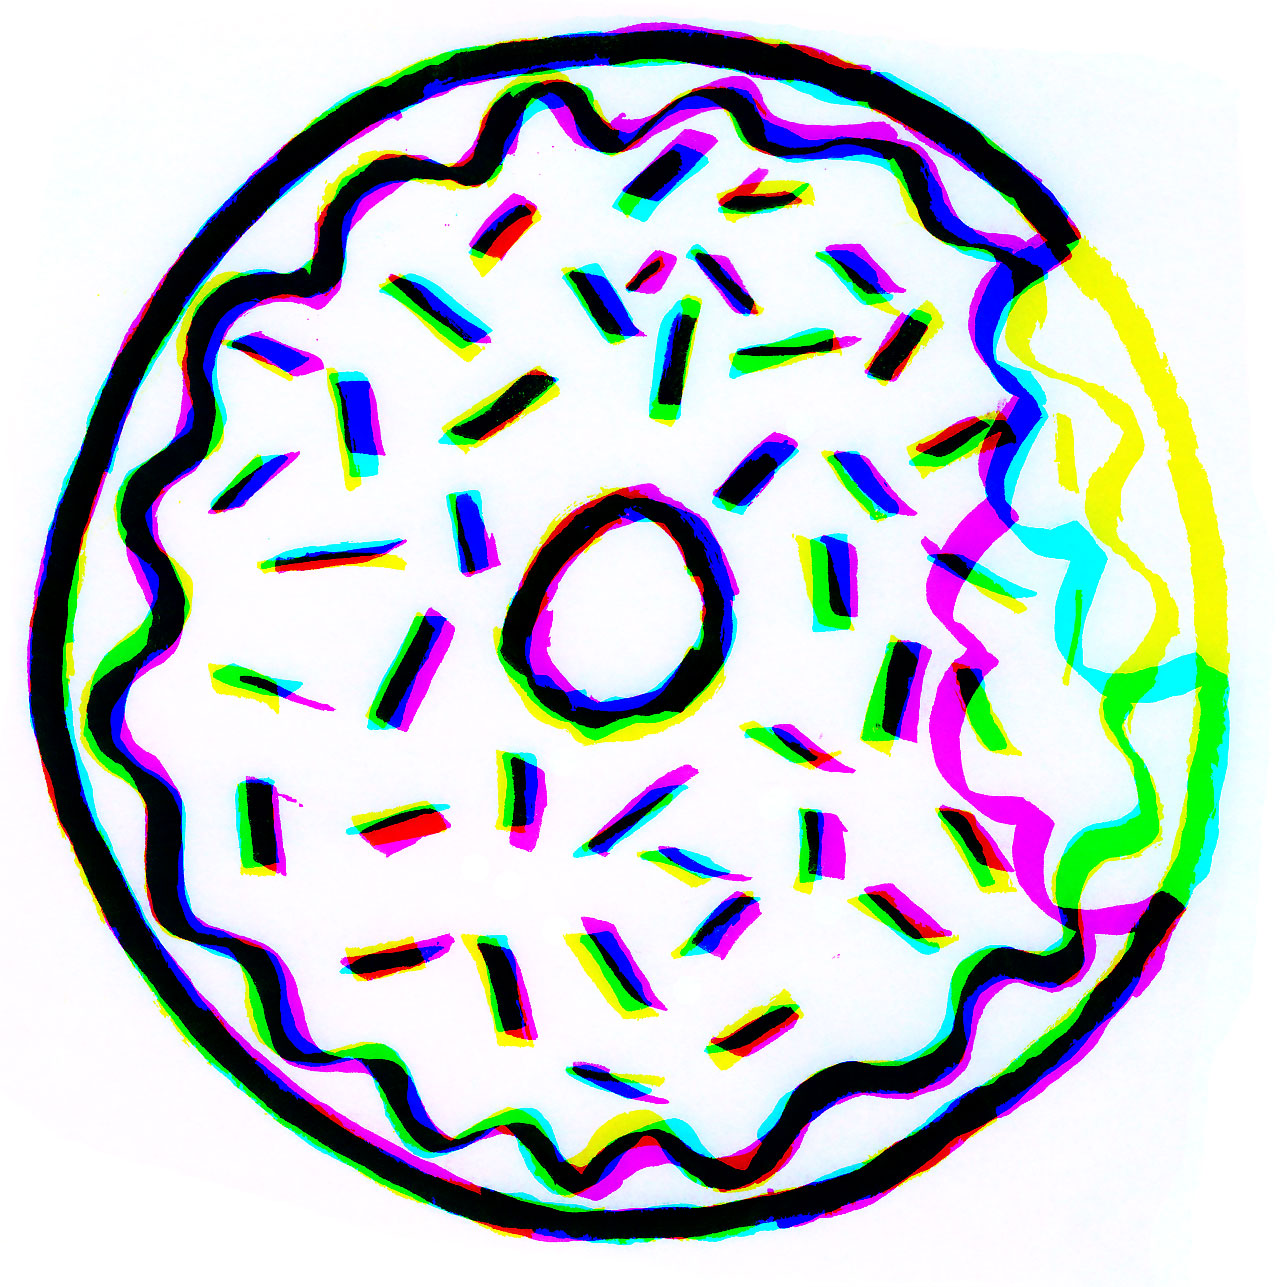 illustration of a donut as it is eaten